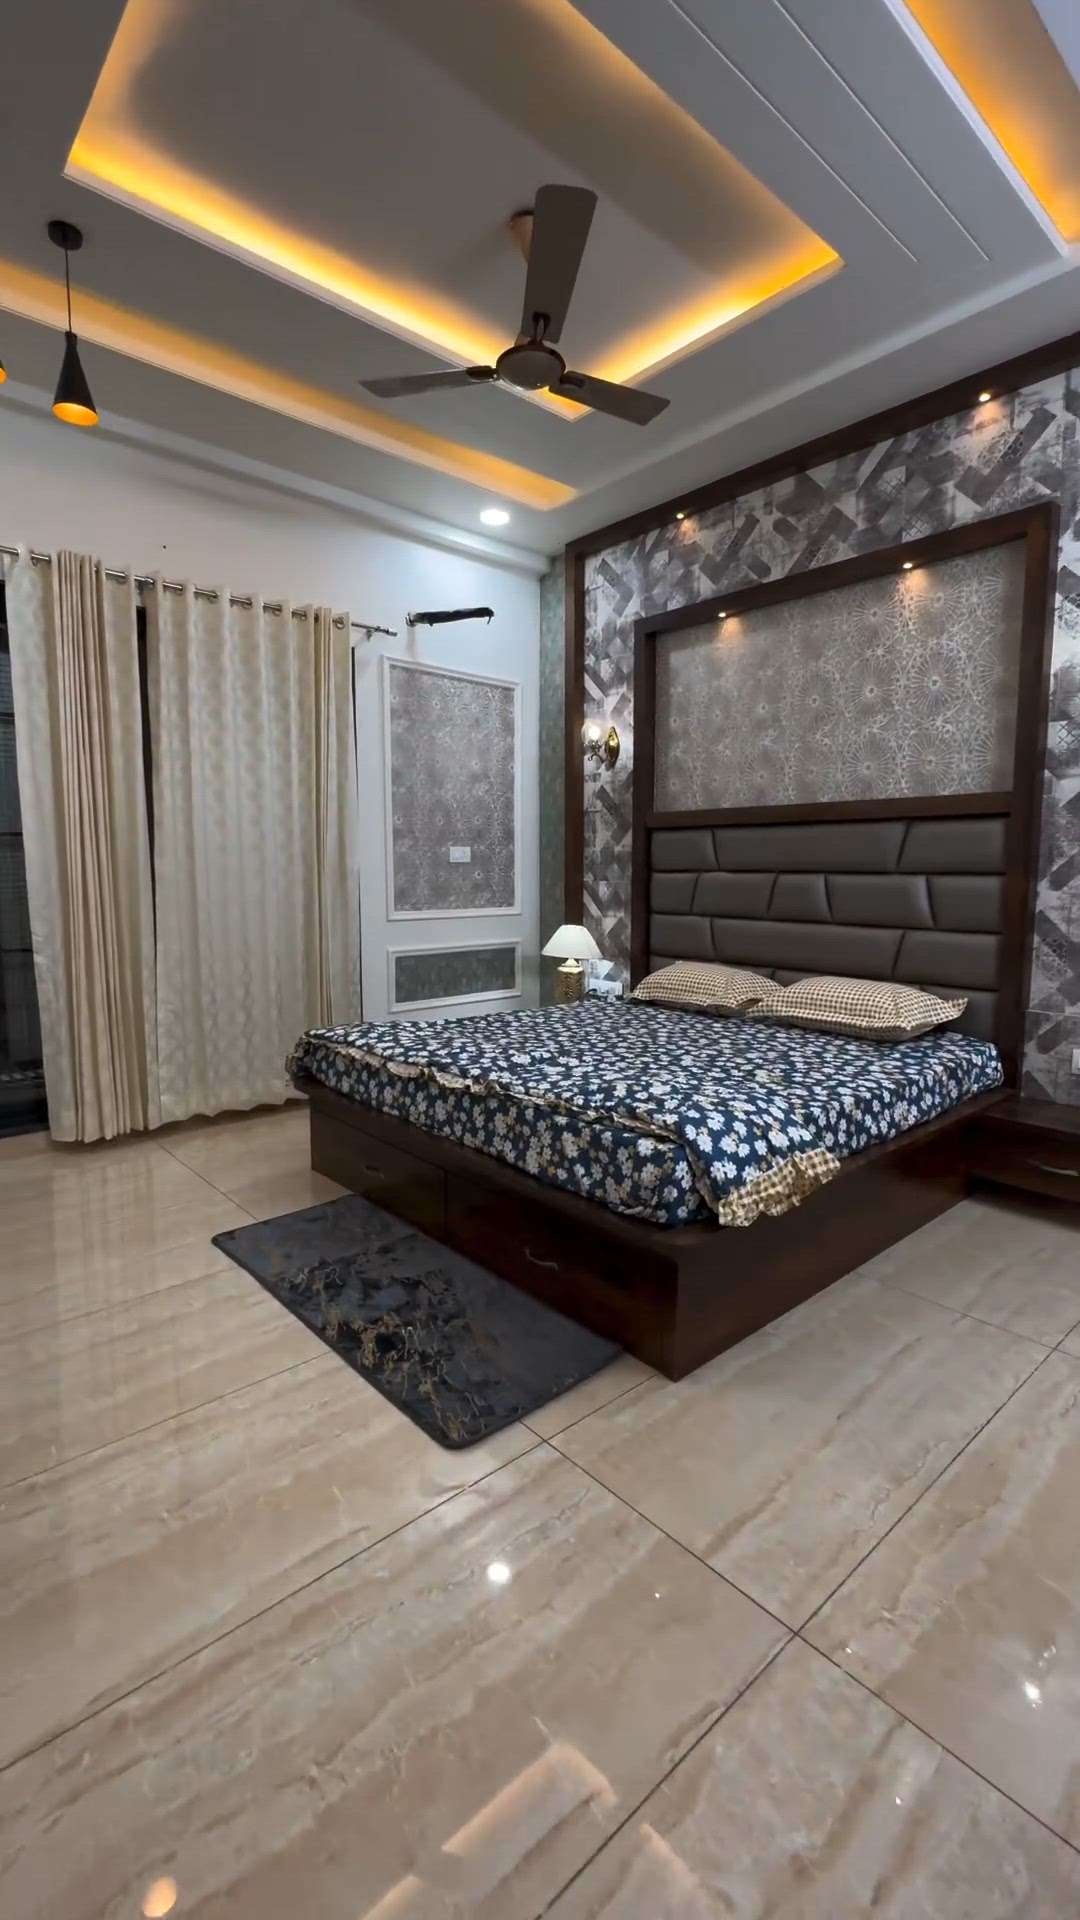 Master Bedroom Interior ❤️
8077017254
 #MasterBedroom  #BedroomDecor  #KingsizeBedroom  #BedroomDecor  #BedroomDesigns  #BedroomIdeas  #WoodenBeds  #bedroomdesign   #BedroomCeilingDesign  #bedroomfurniture  #bedroomchair  #bedroomdeaignideas  #InteriorDesigner  #KitchenInterior  #Architectural&Interior  #Architectural&Interior  #LUXURY_INTERIOR  #meerut  #delhi  #Delhihome  #delhincr  #gaziabad  #muradnagar  #muzaffarnagar  #saharanpur  #bulandshahar  #agra  #mathura  #hapur  #Lucknow  #lucknowcity  #jaipur  #faridabad  #noida  #greaternoida  #chandigarh  #bhagpat  #meerut  #LUXURY_INTERIOR  #LUXURY_SOFA  #luxurysofa  #LUXURY_BED  #interastudioLuxury  #luxuaryrealestate